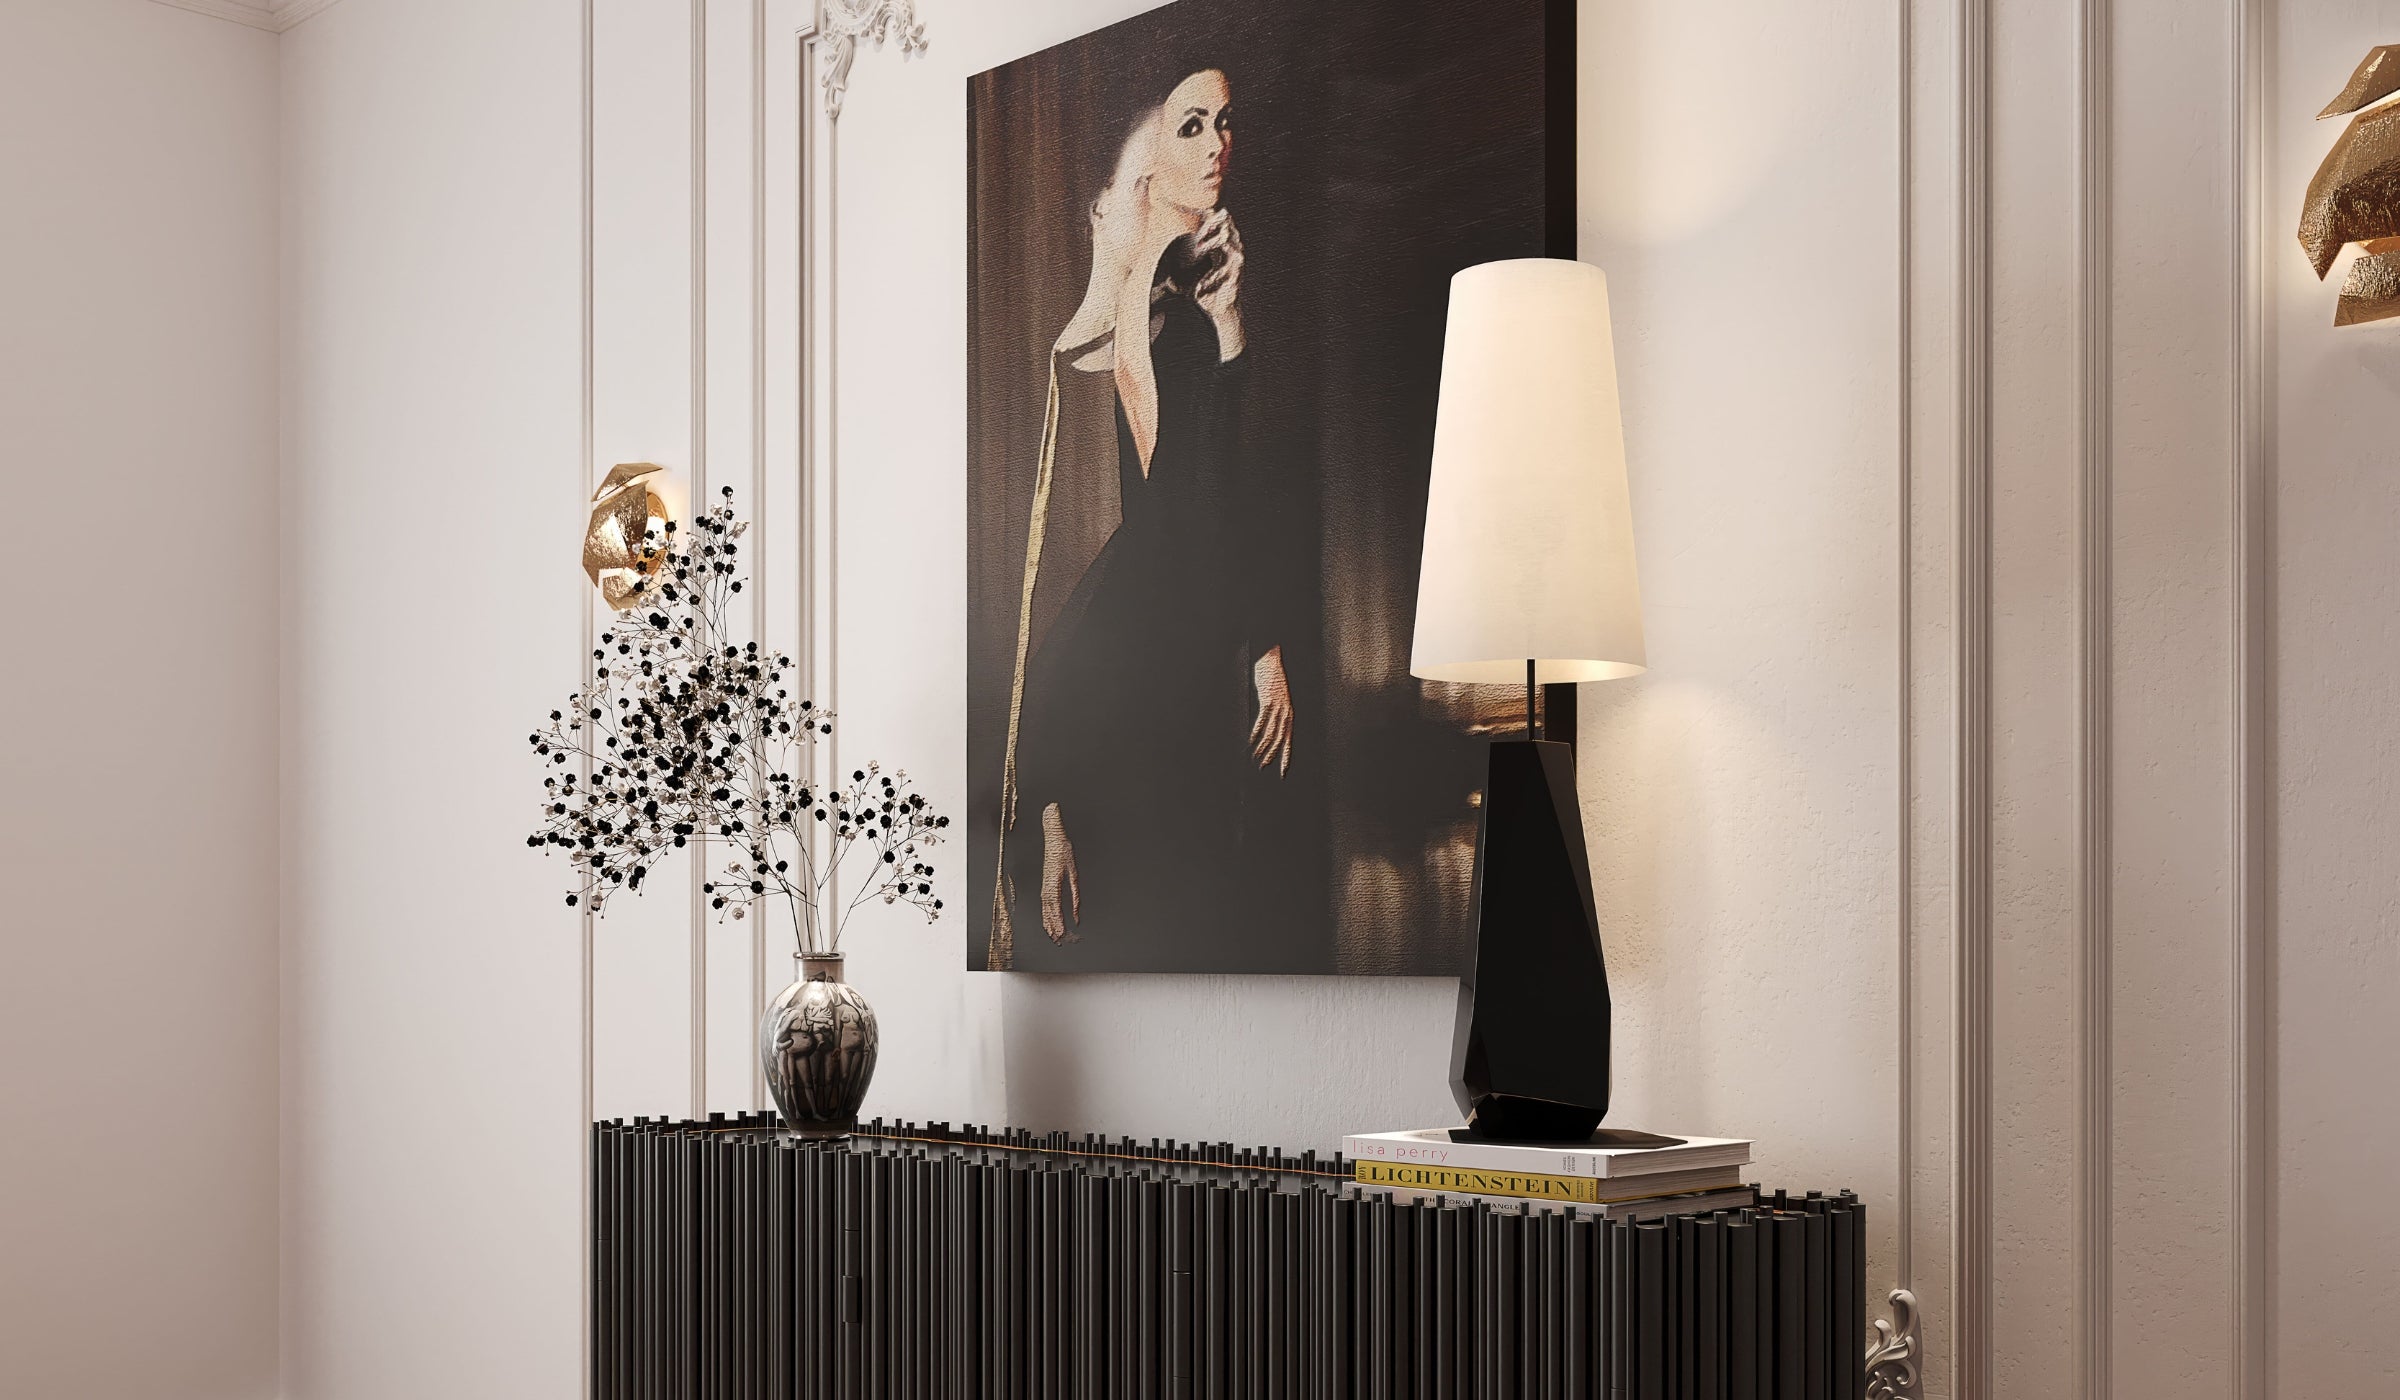 Feel Big - Black table lamp, designer lighting in fiberglass, silver leaves, stainless steel and silk